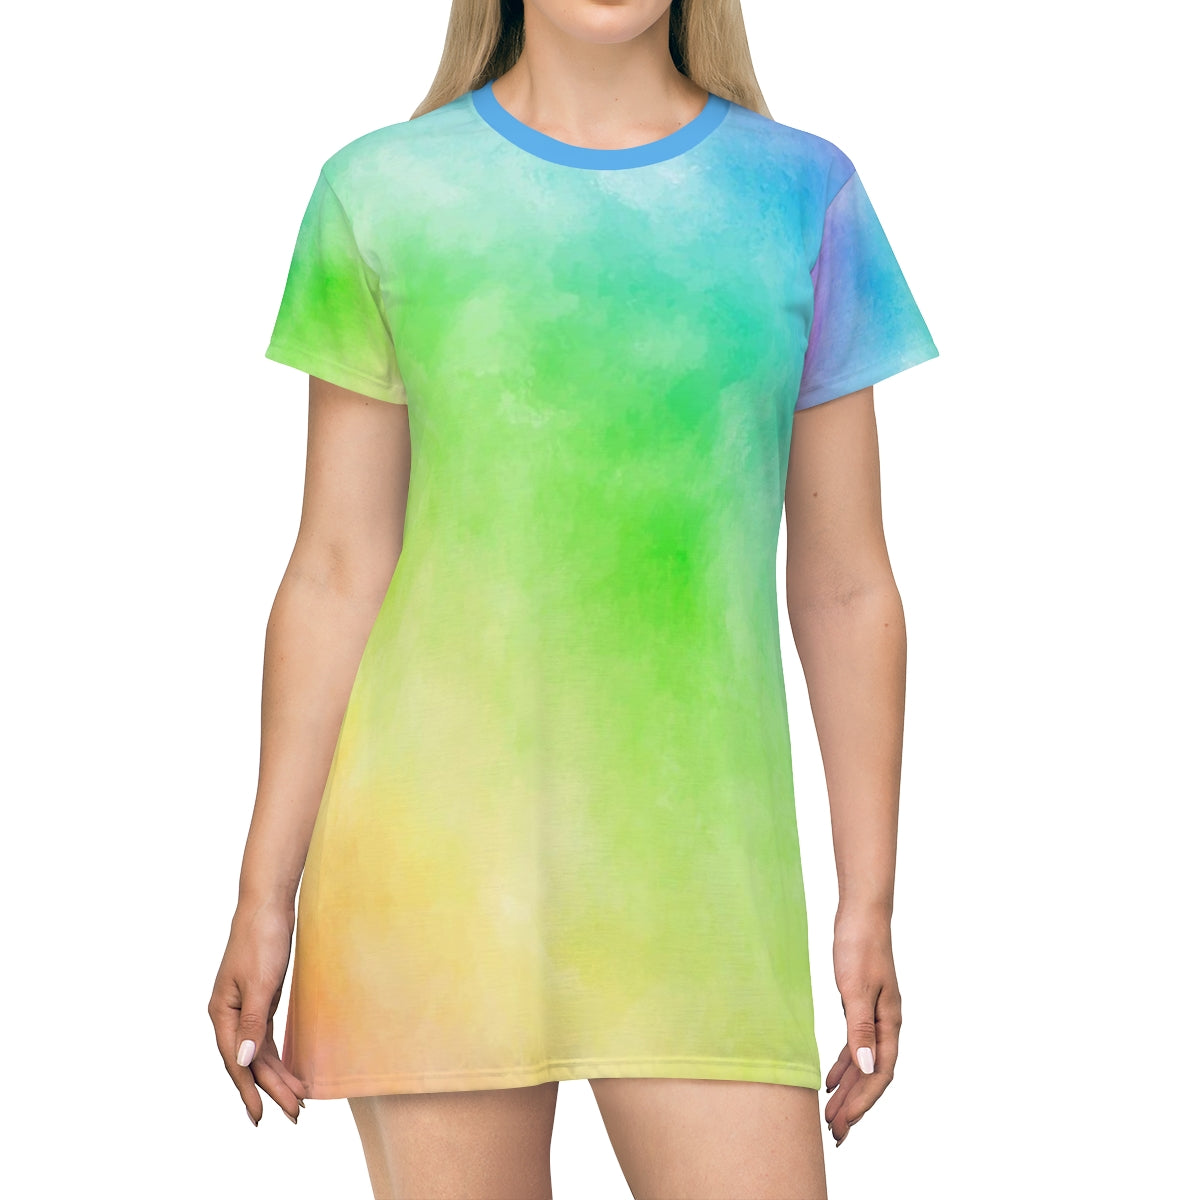 Rainbow Tie Dye Tshirt Dress, Women Summer Beach Cute Festival Party Casual Designer Short Sleeve Girls Starcove Fashion